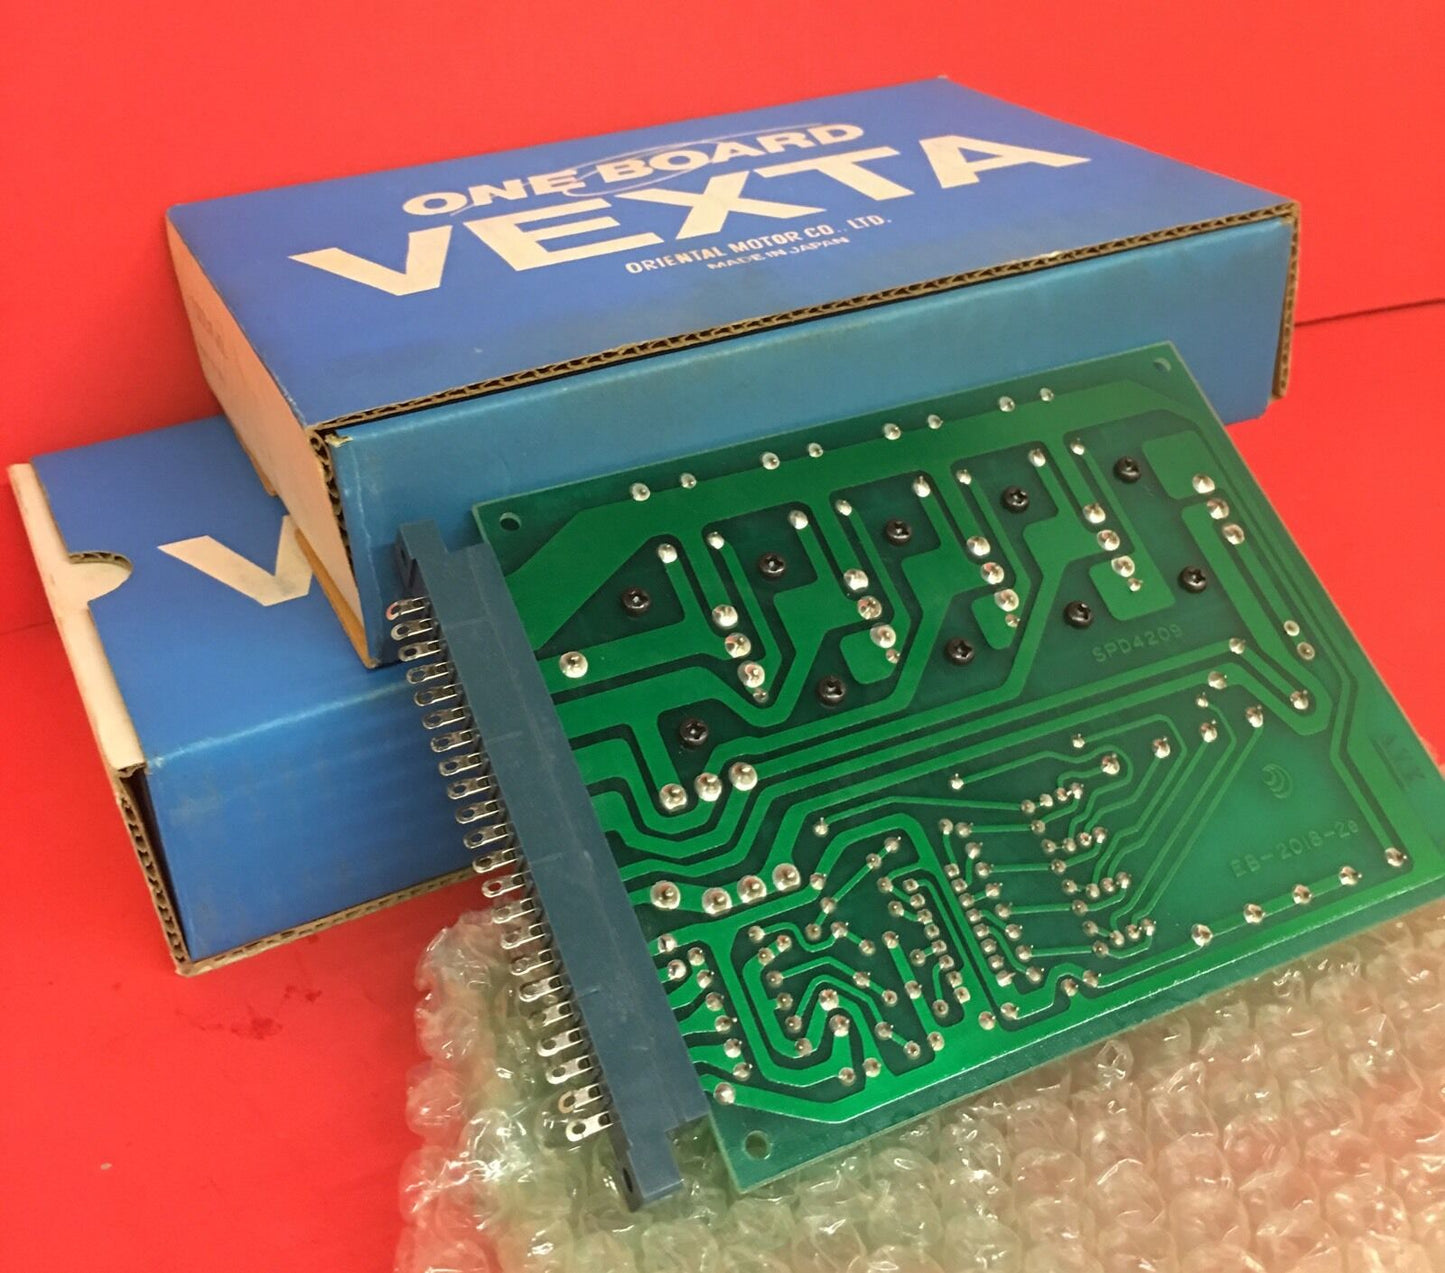 VEXTA One Board 2 Two Phase driver SPD4209 EB-2018-2E                        AUC